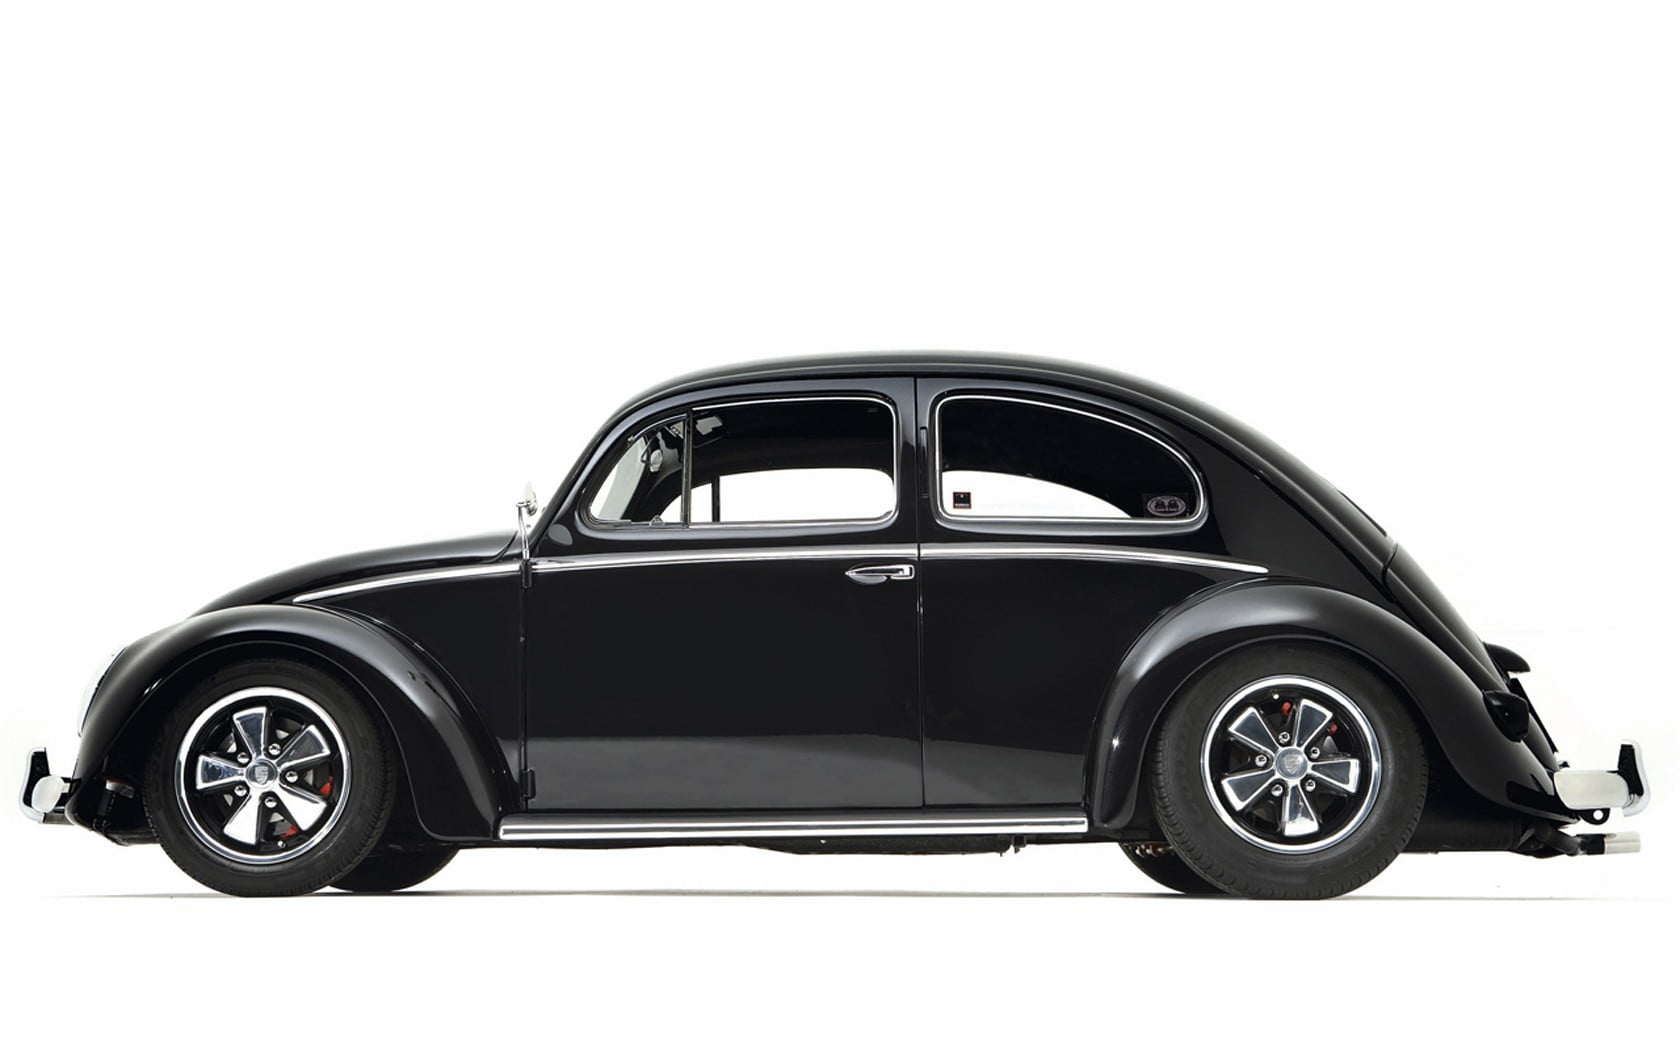 black beetle car